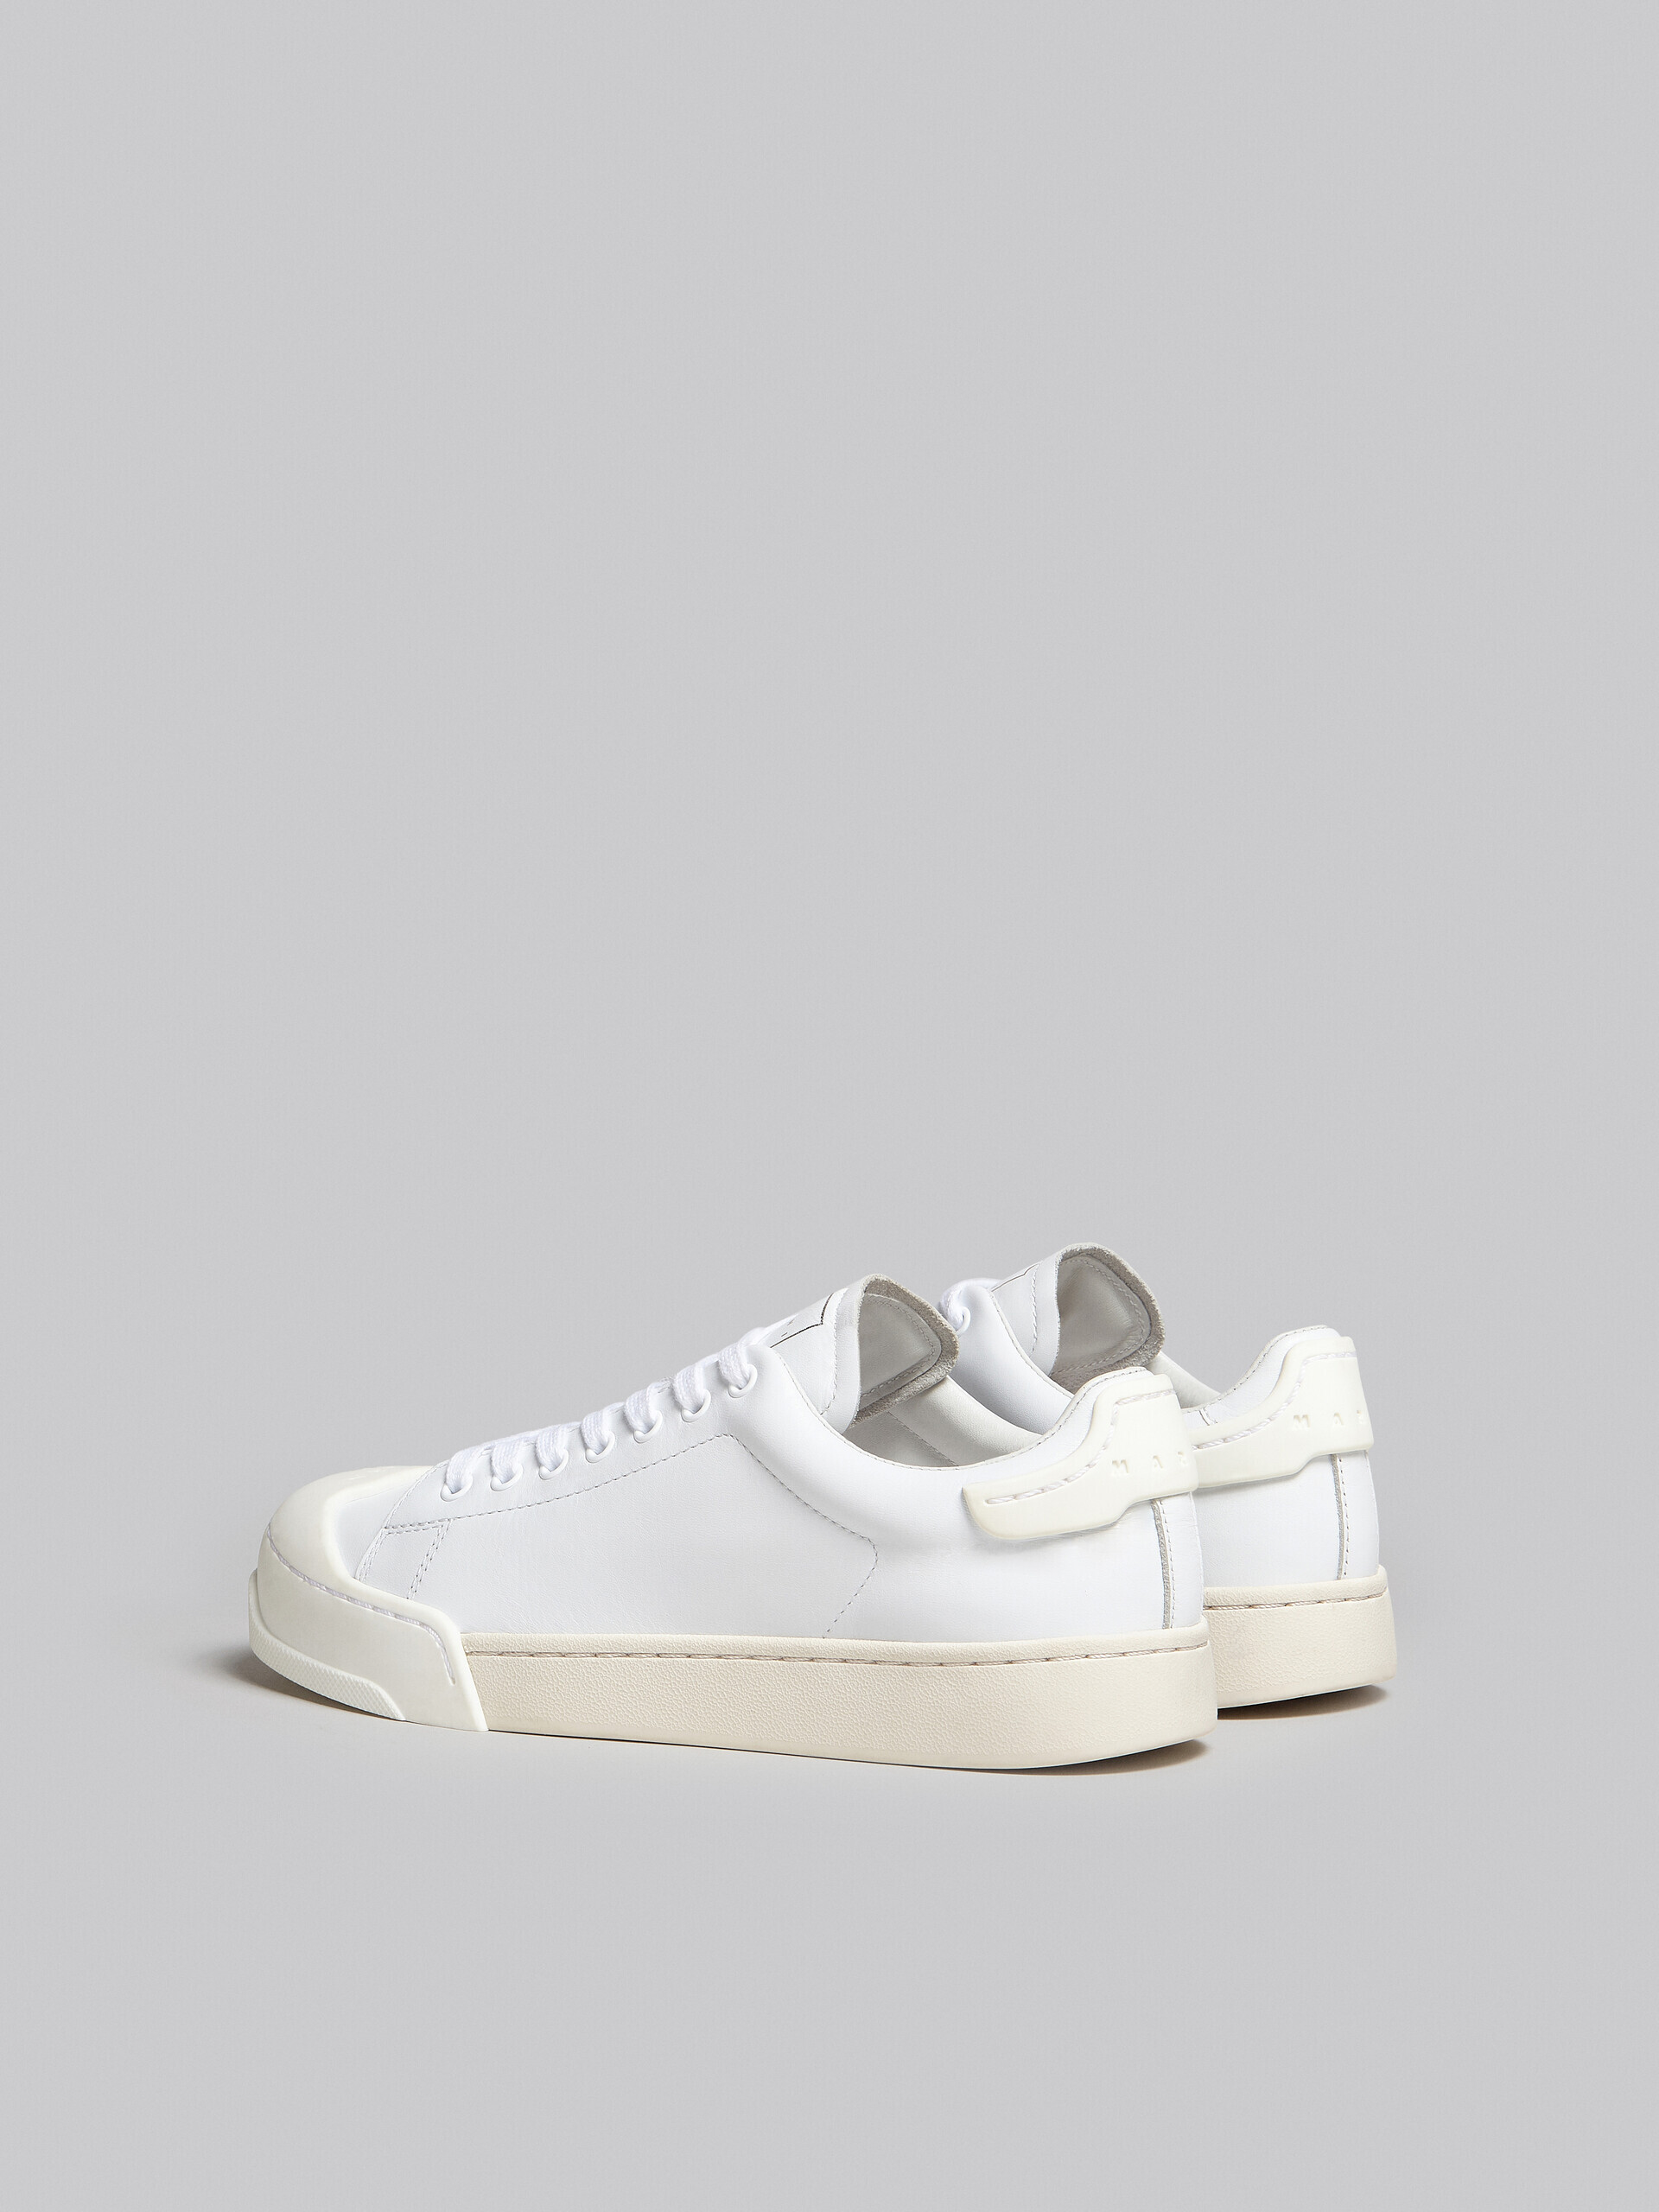 Dada Bumper sneaker in white leather - Sneakers - Image 3